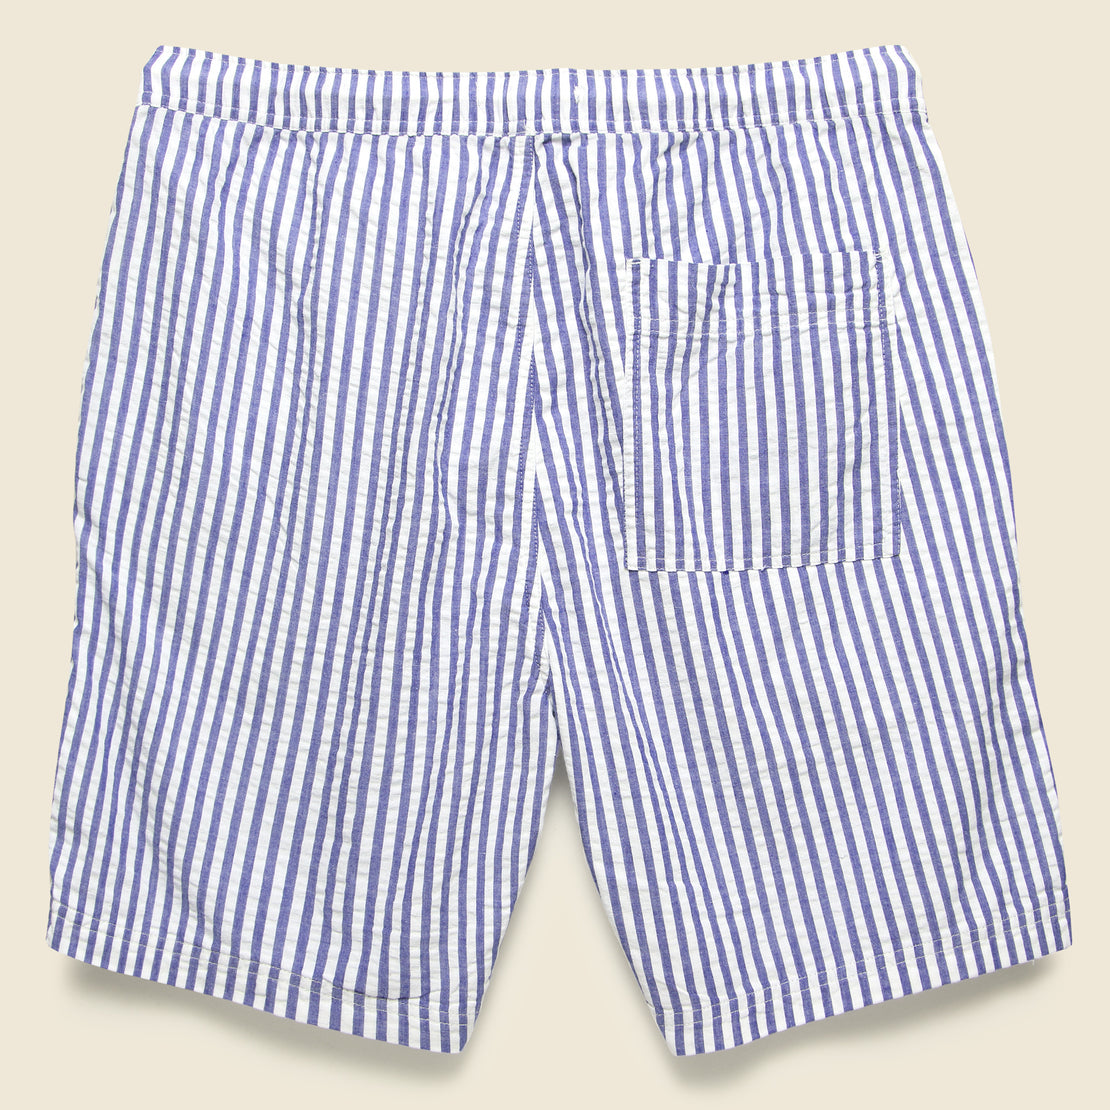 Seersucker Wide Stripe Saturday Shorts - Blue/White - Alex Mill - STAG Provisions - Shorts - Striped